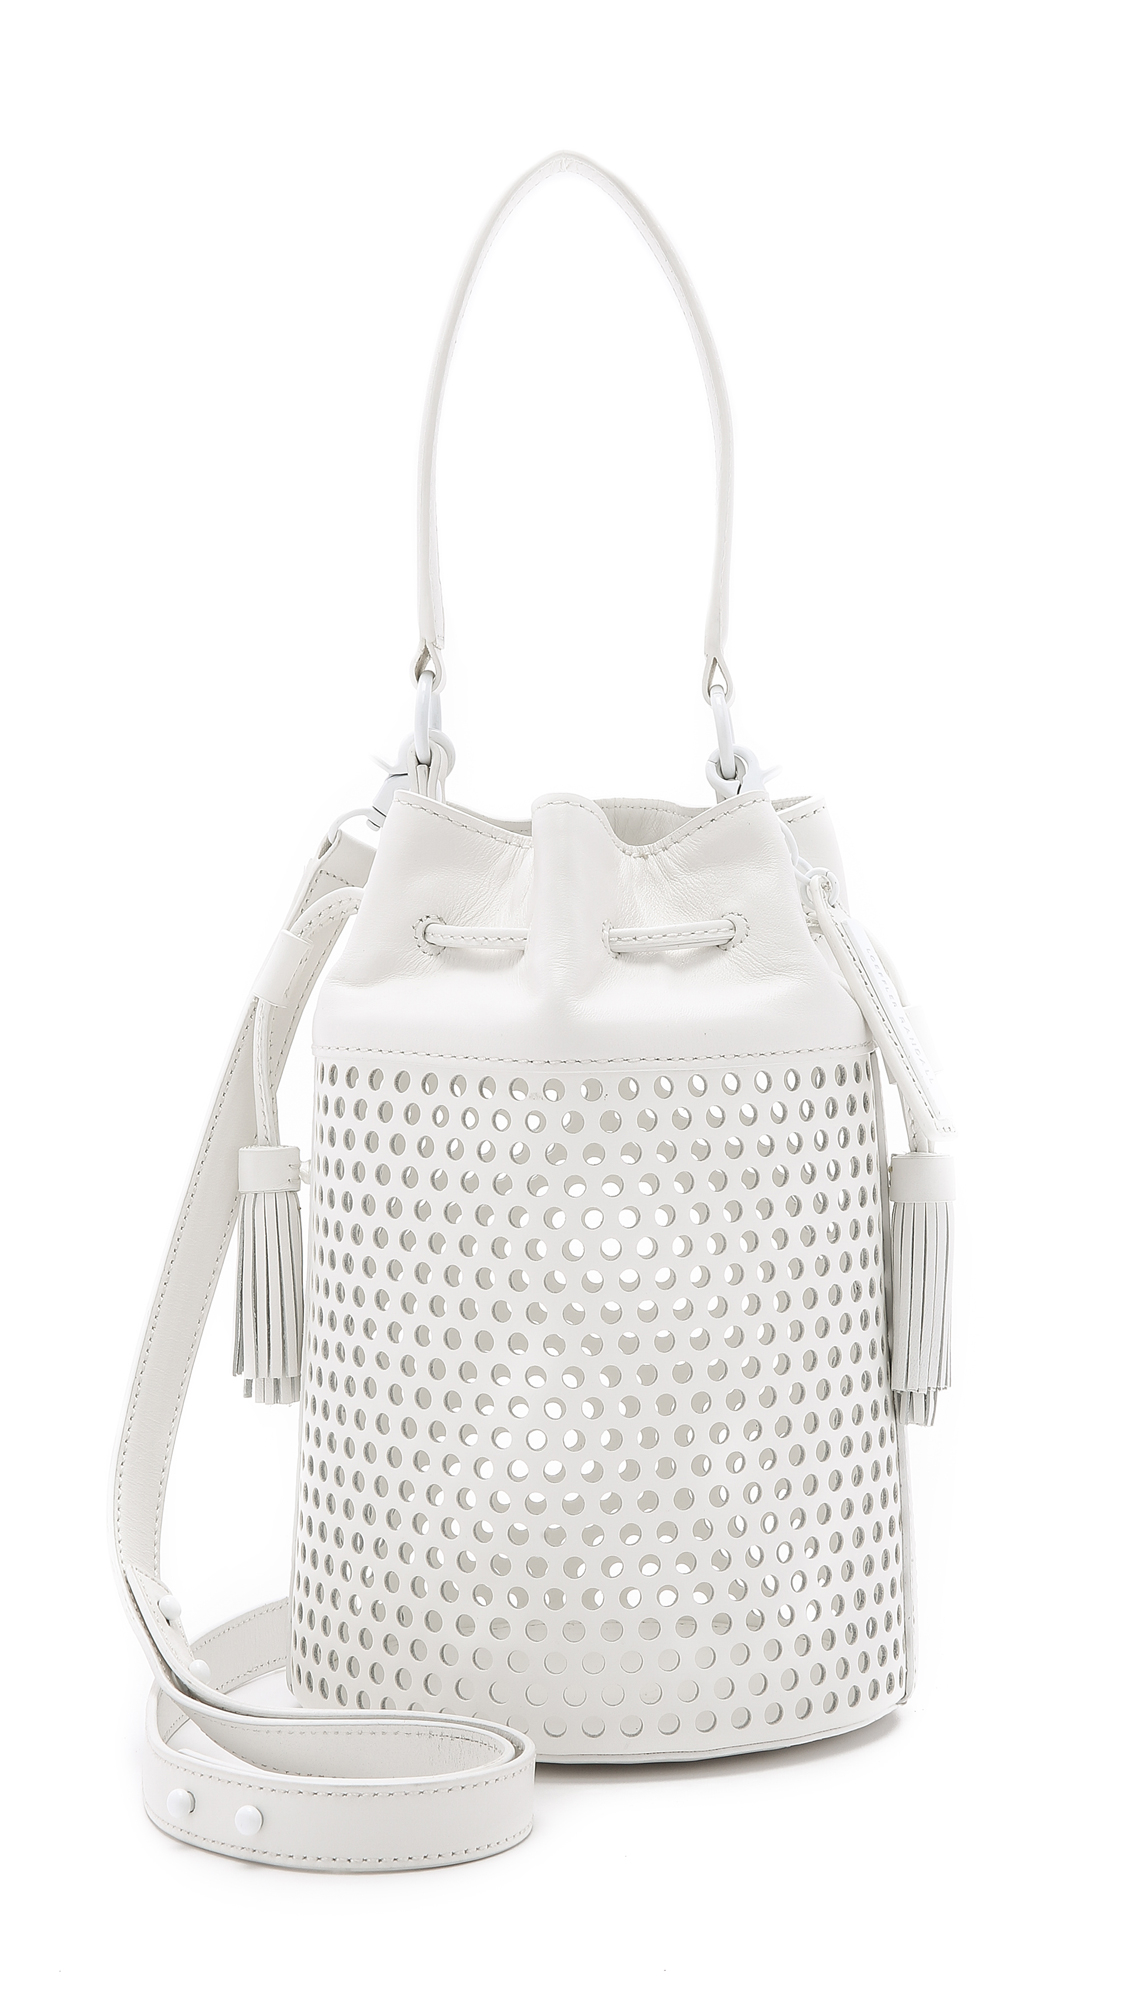 Loeffler randall Industry Perforated Bucket Bag - White in White | Lyst